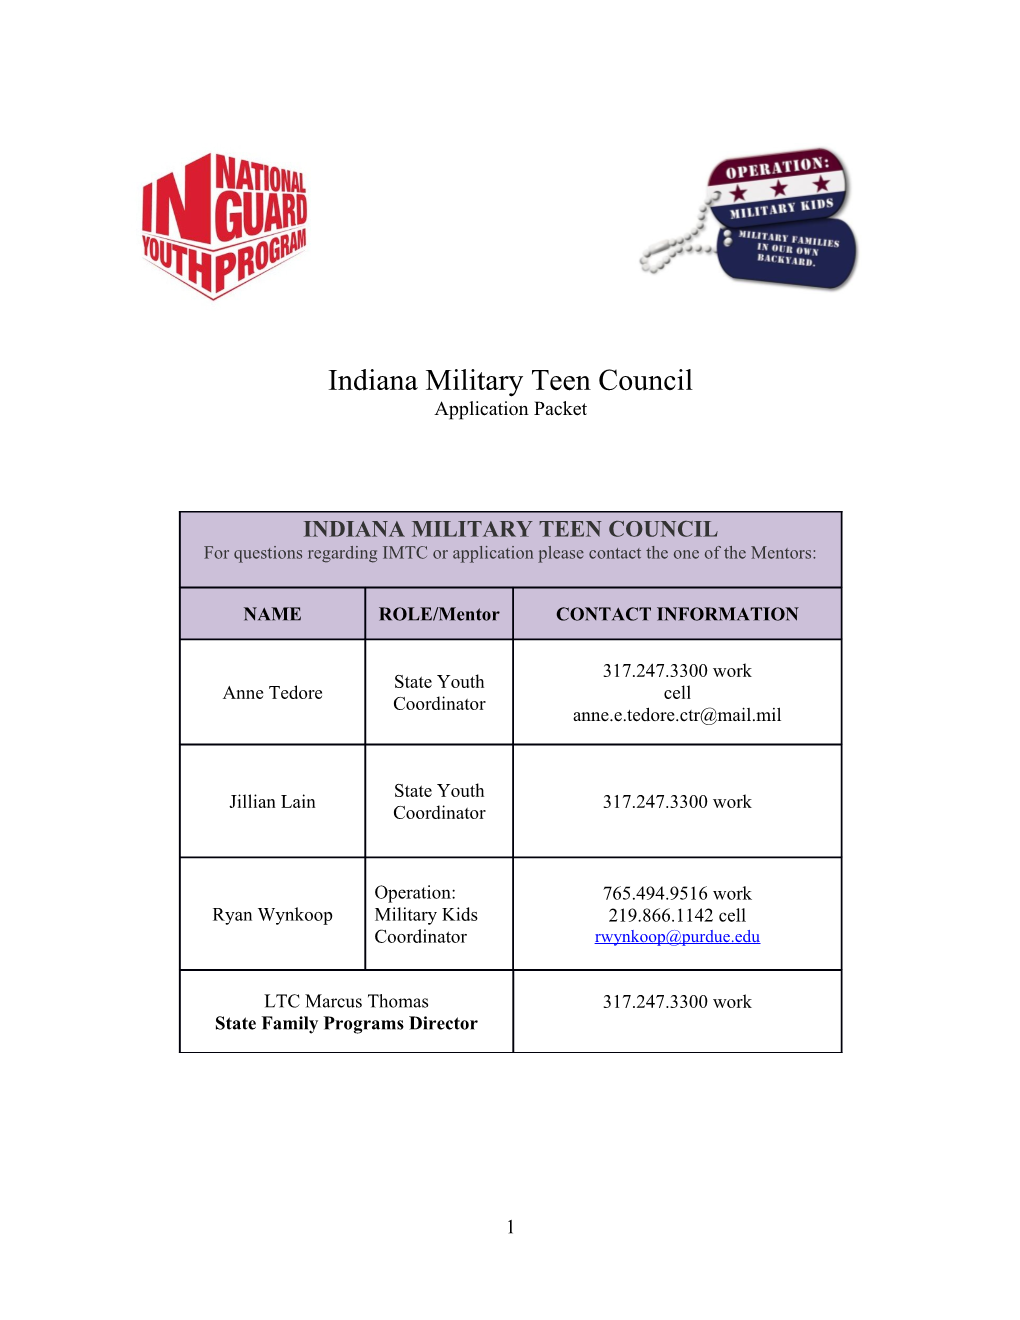 Indiana Military Teen Council Membership Criteria